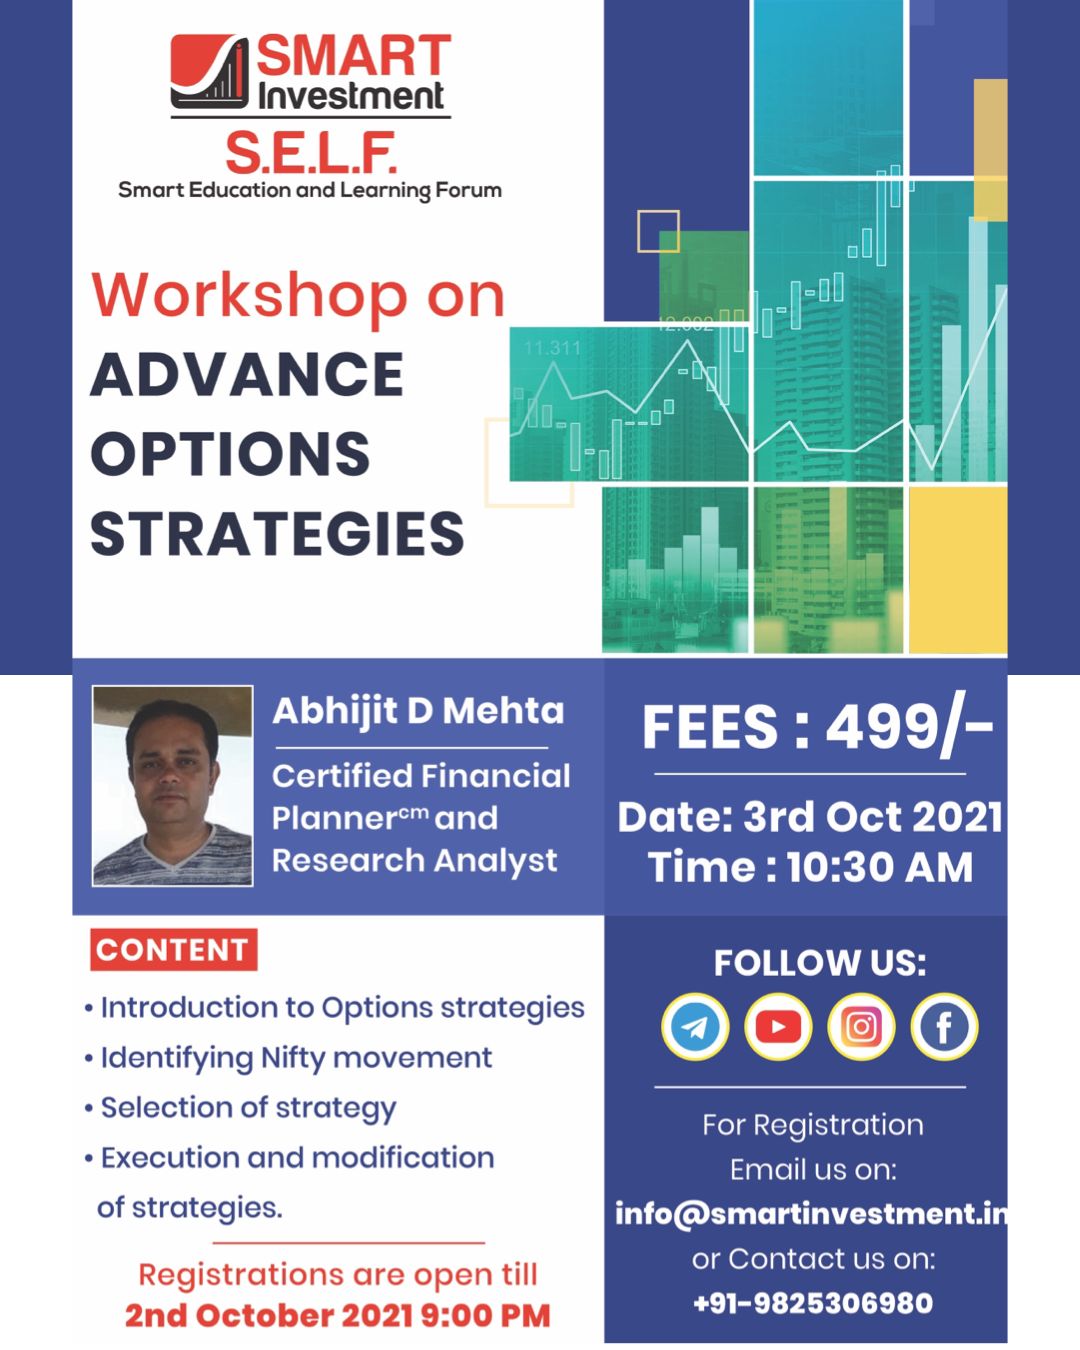 Workshop on  "Advace Options Strategies" by Abhijit Mehta